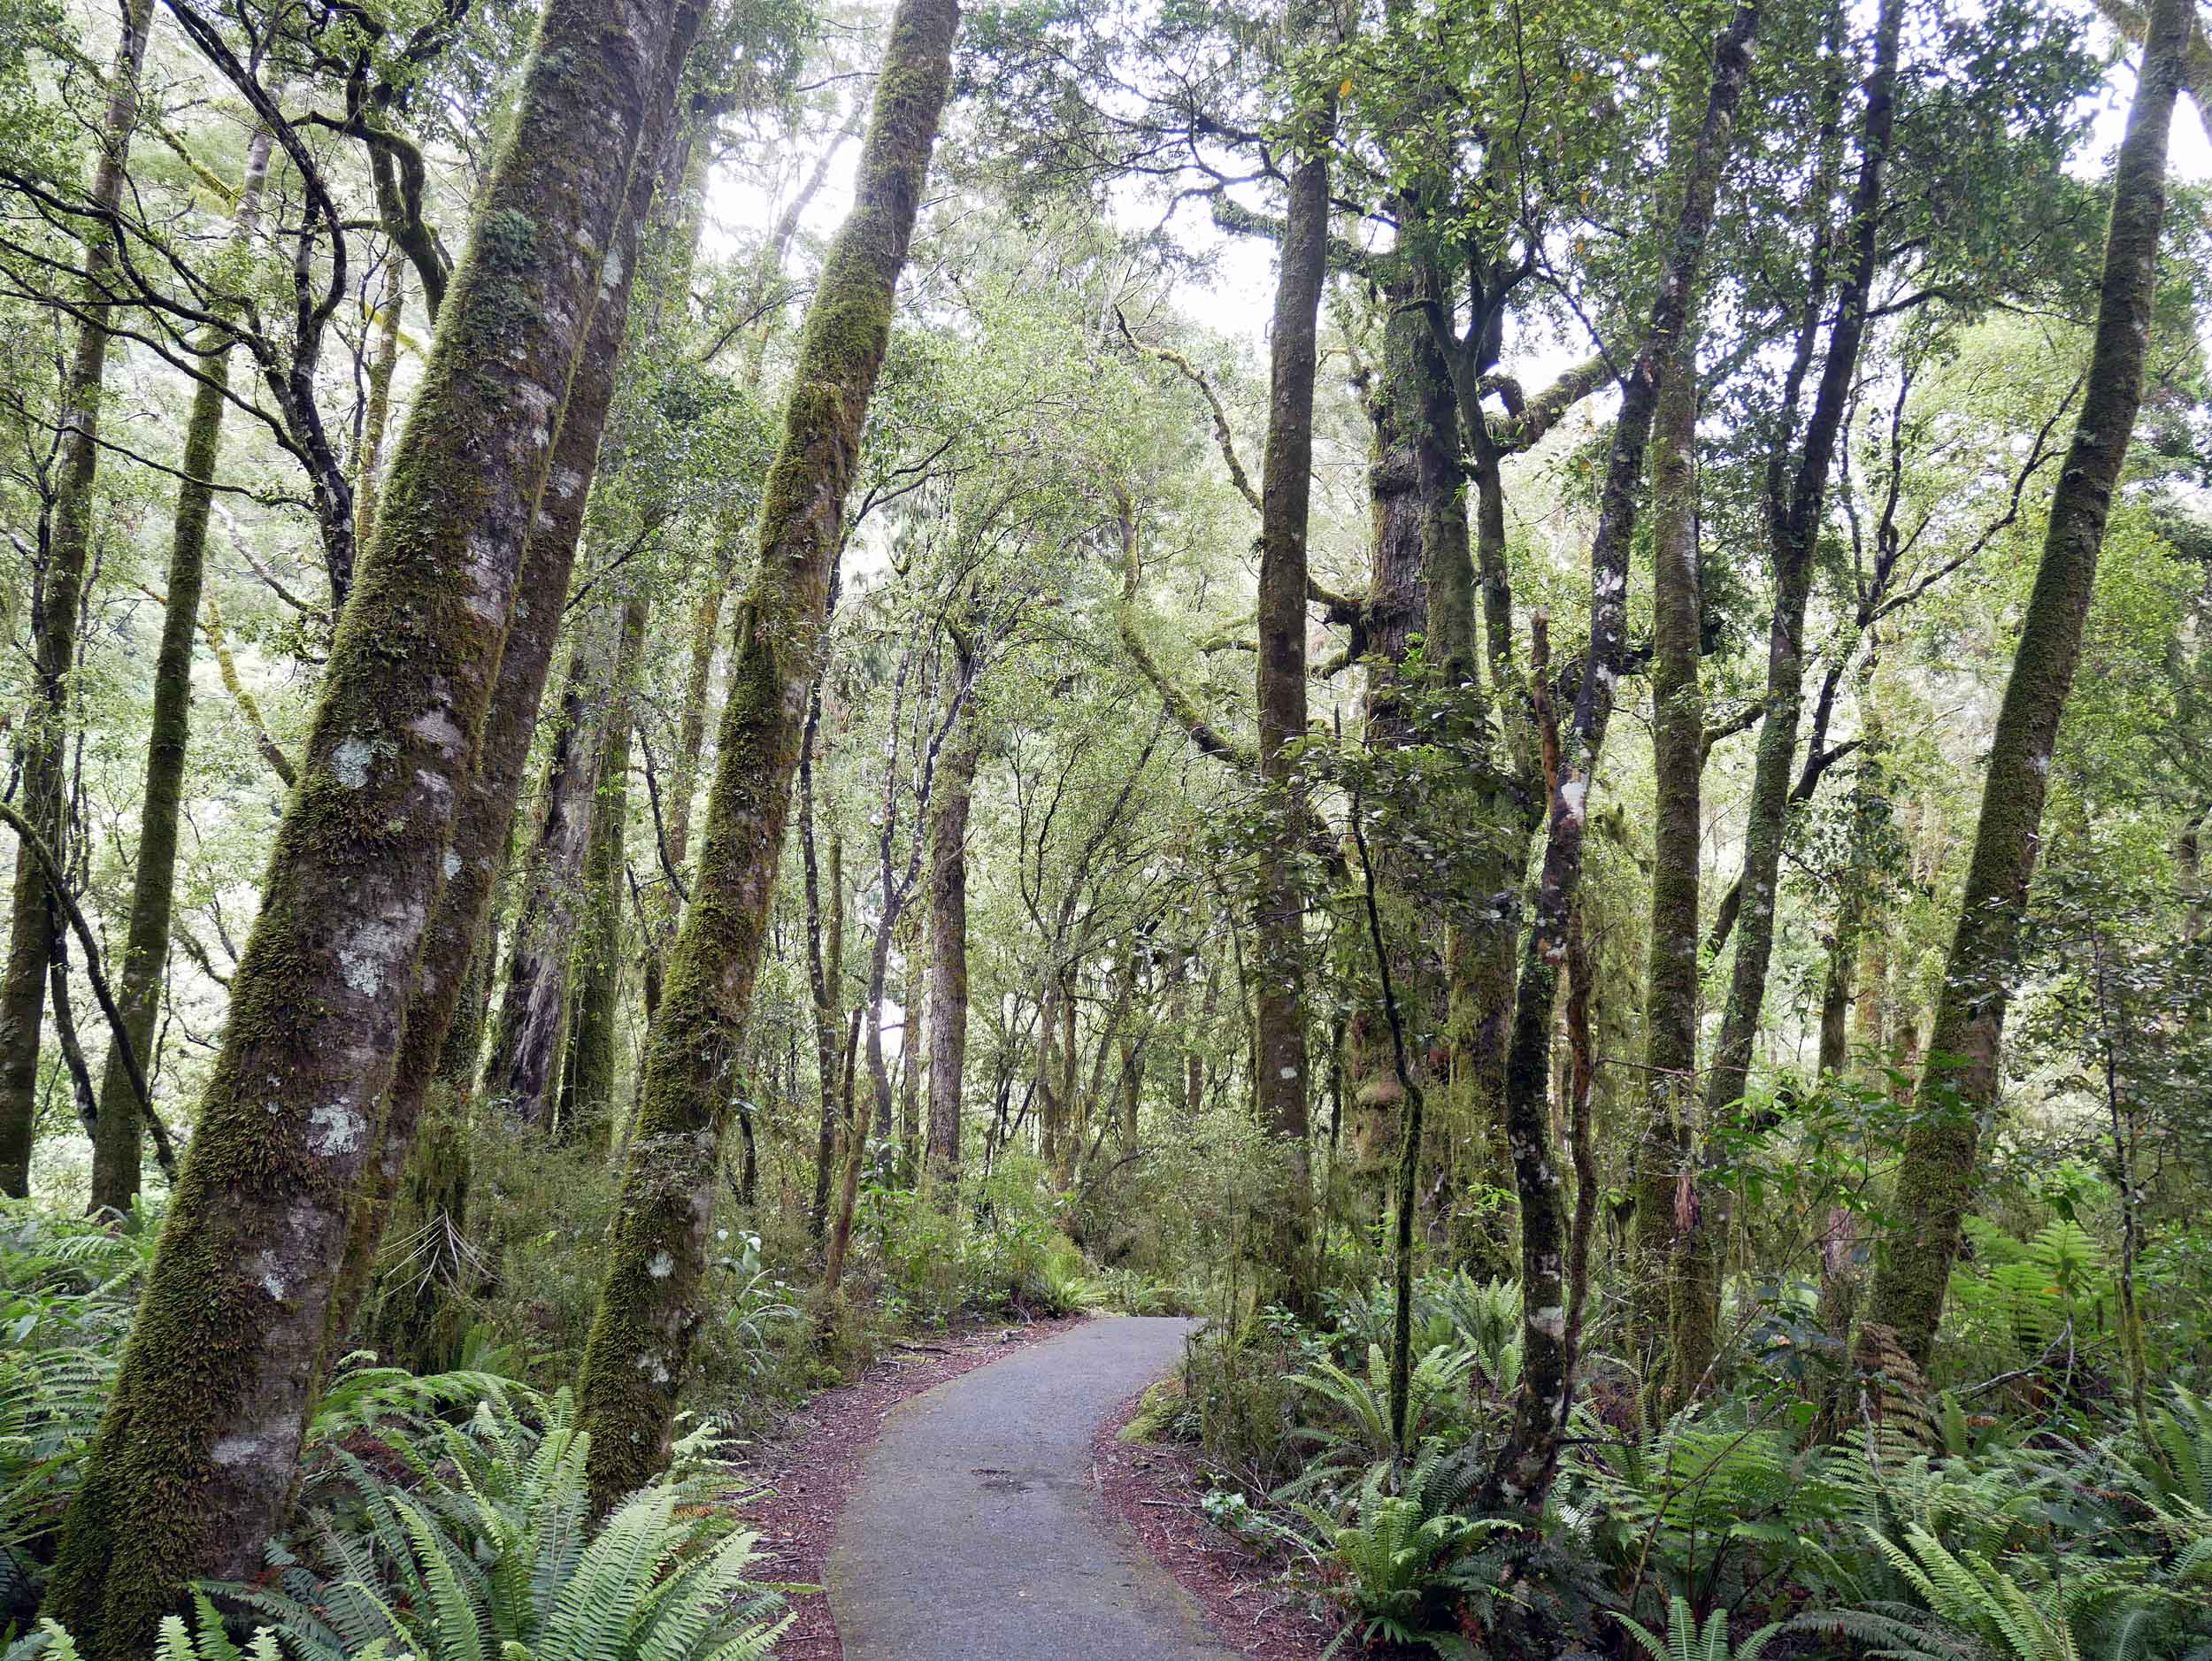  The Ship Creek bog walk took us through pre-historic vegetation and towering trees (Jan 6). 